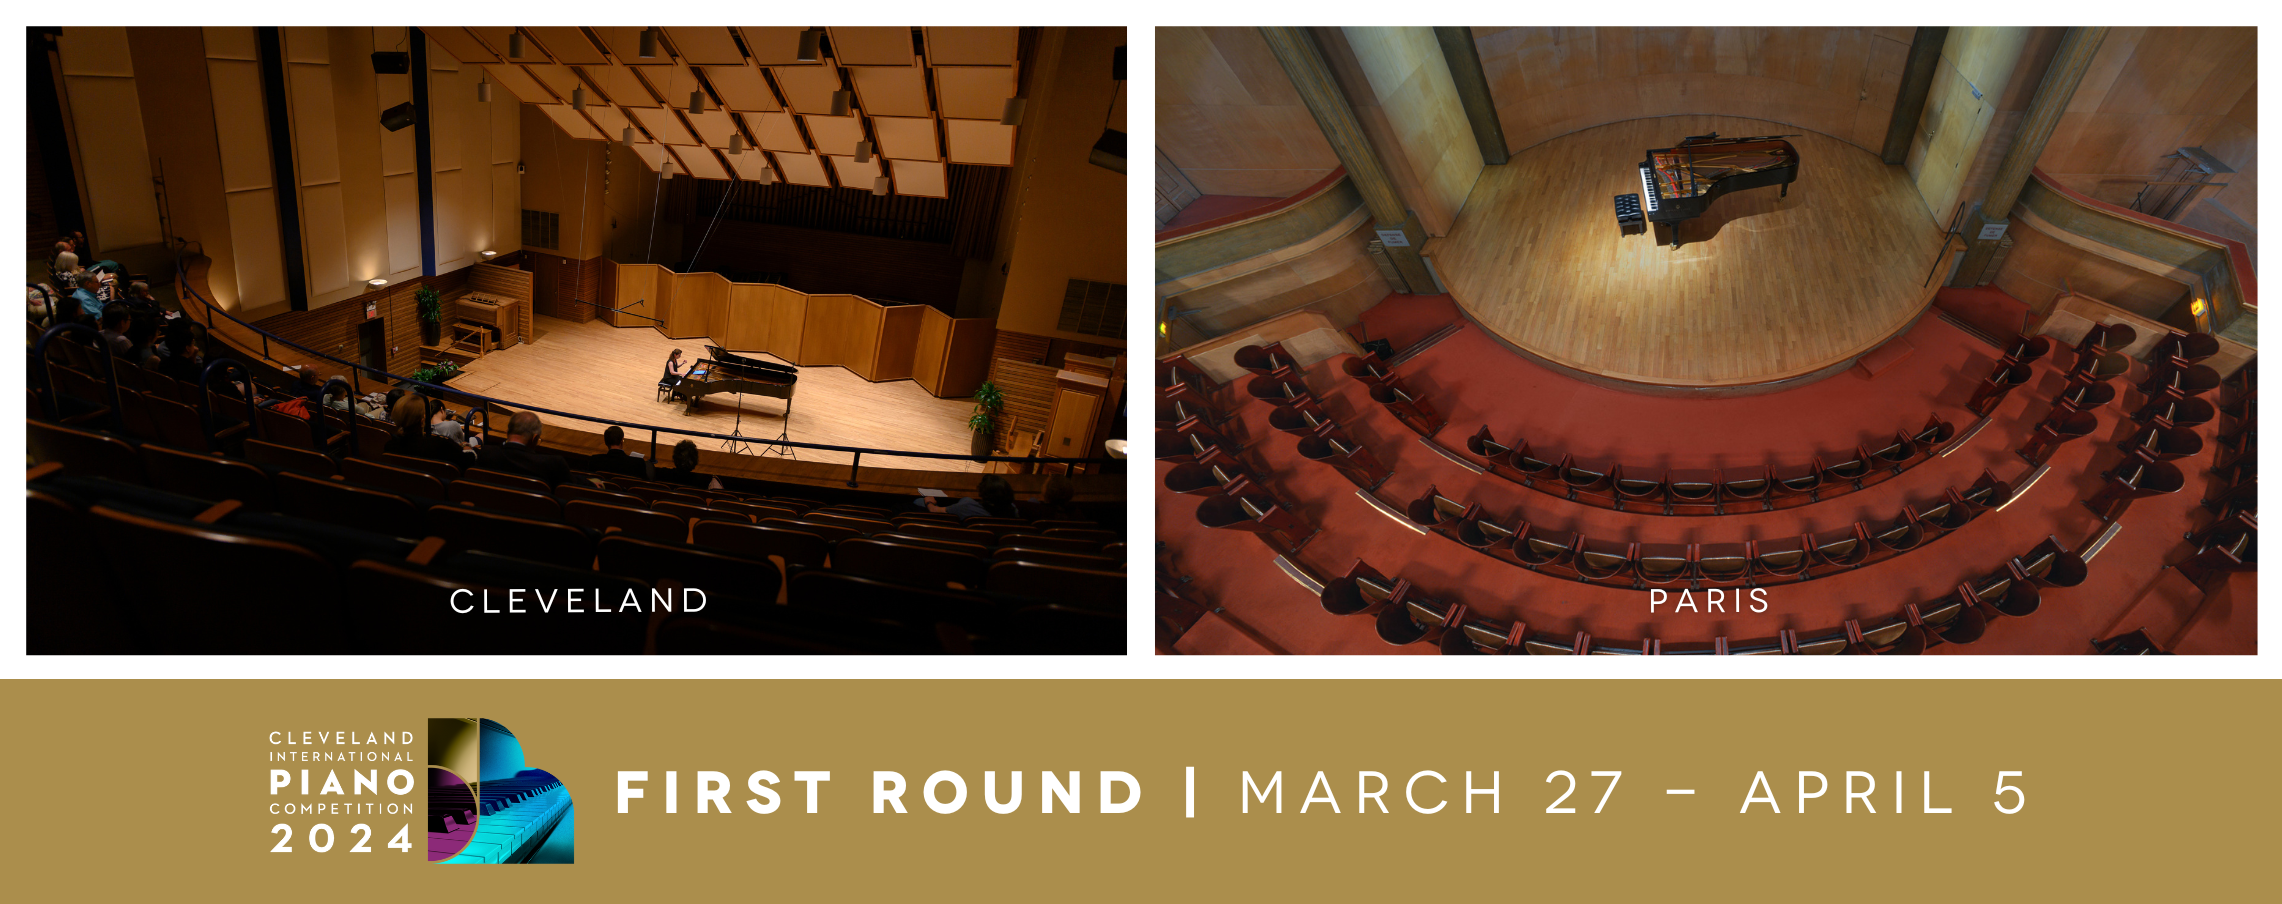 Cleveland International Piano Competition 2024 Frist Round. March 27 - April 5. Cleveland - Paris